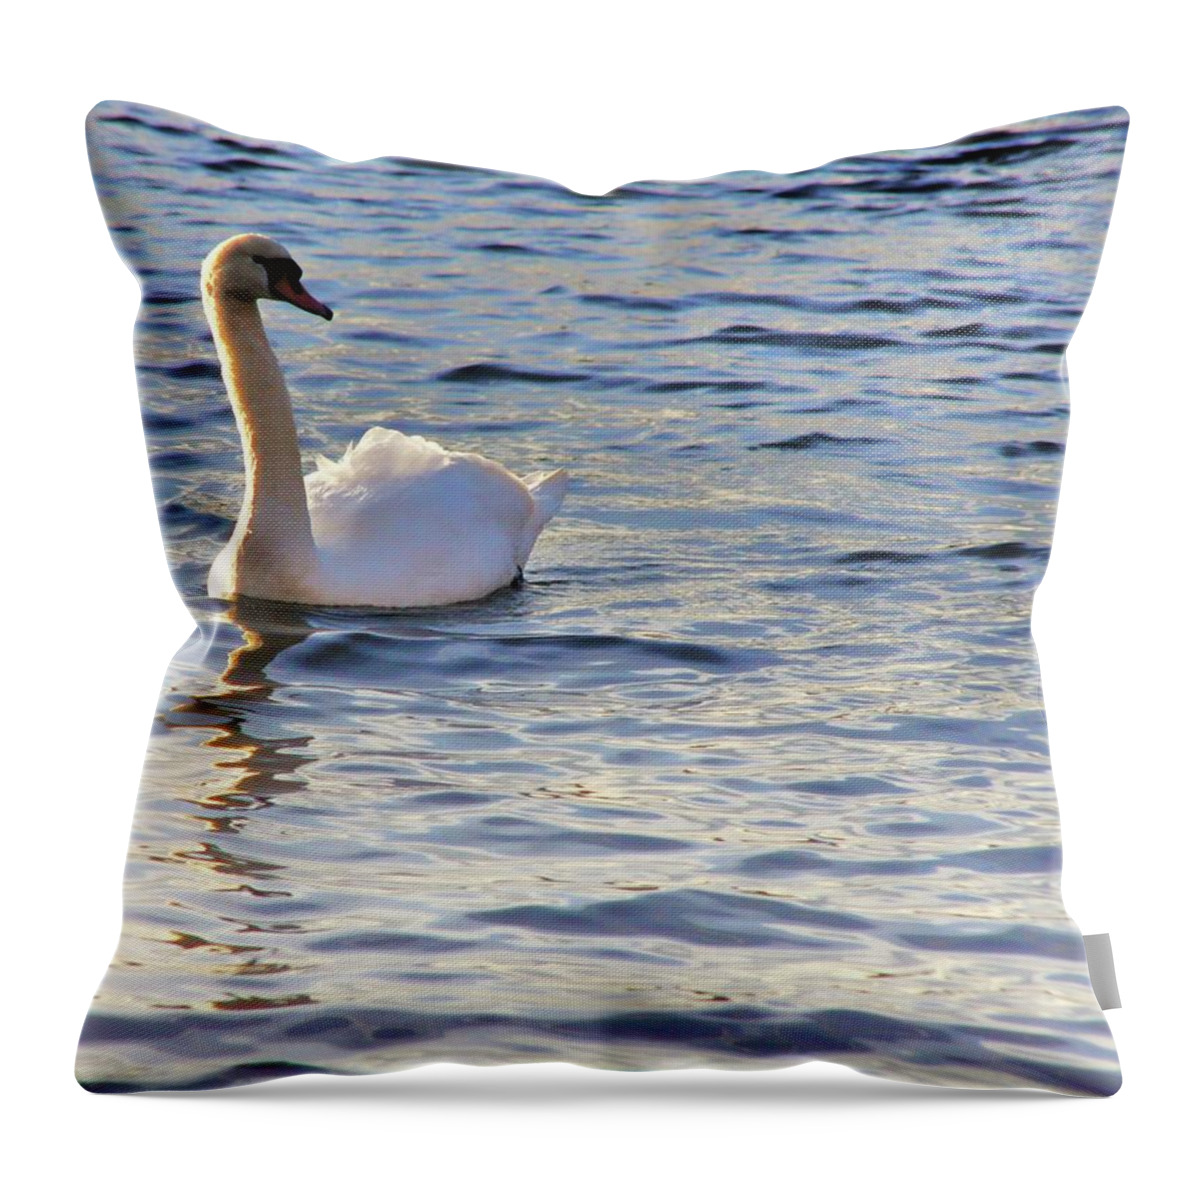 Nik Watt Throw Pillow featuring the photograph Duddingston Swan 1 by Nik Watt